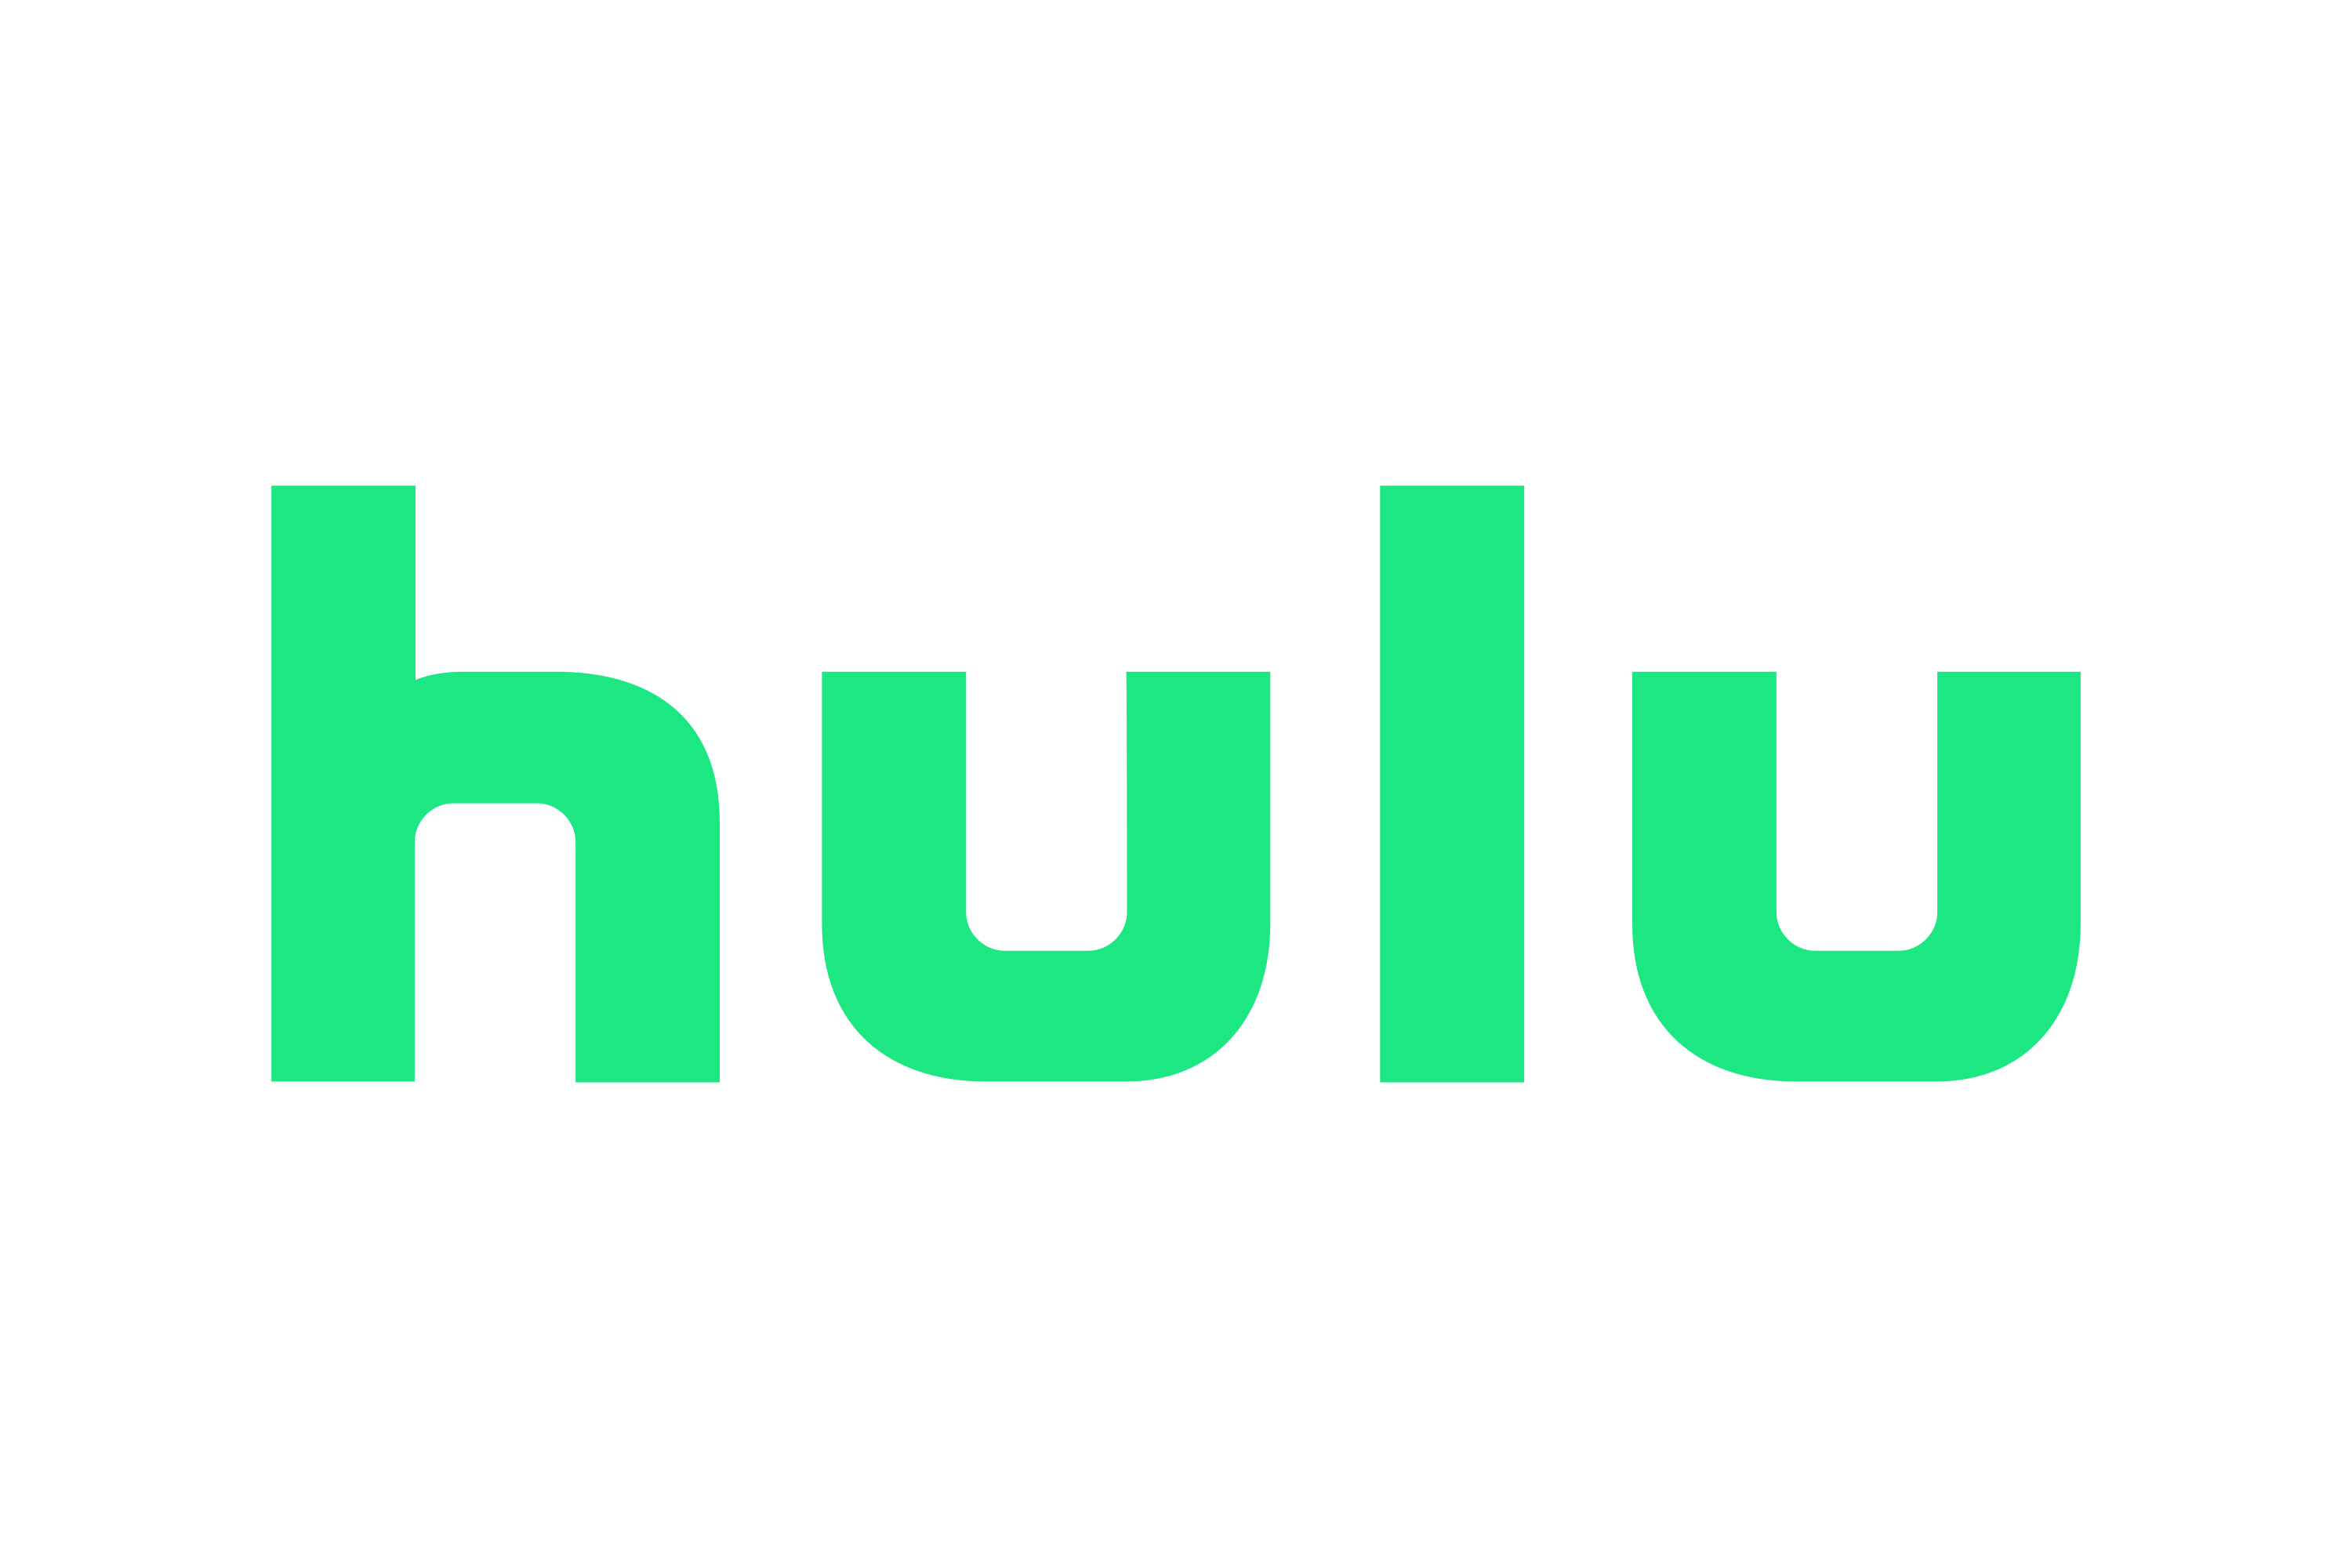 hulu logo png